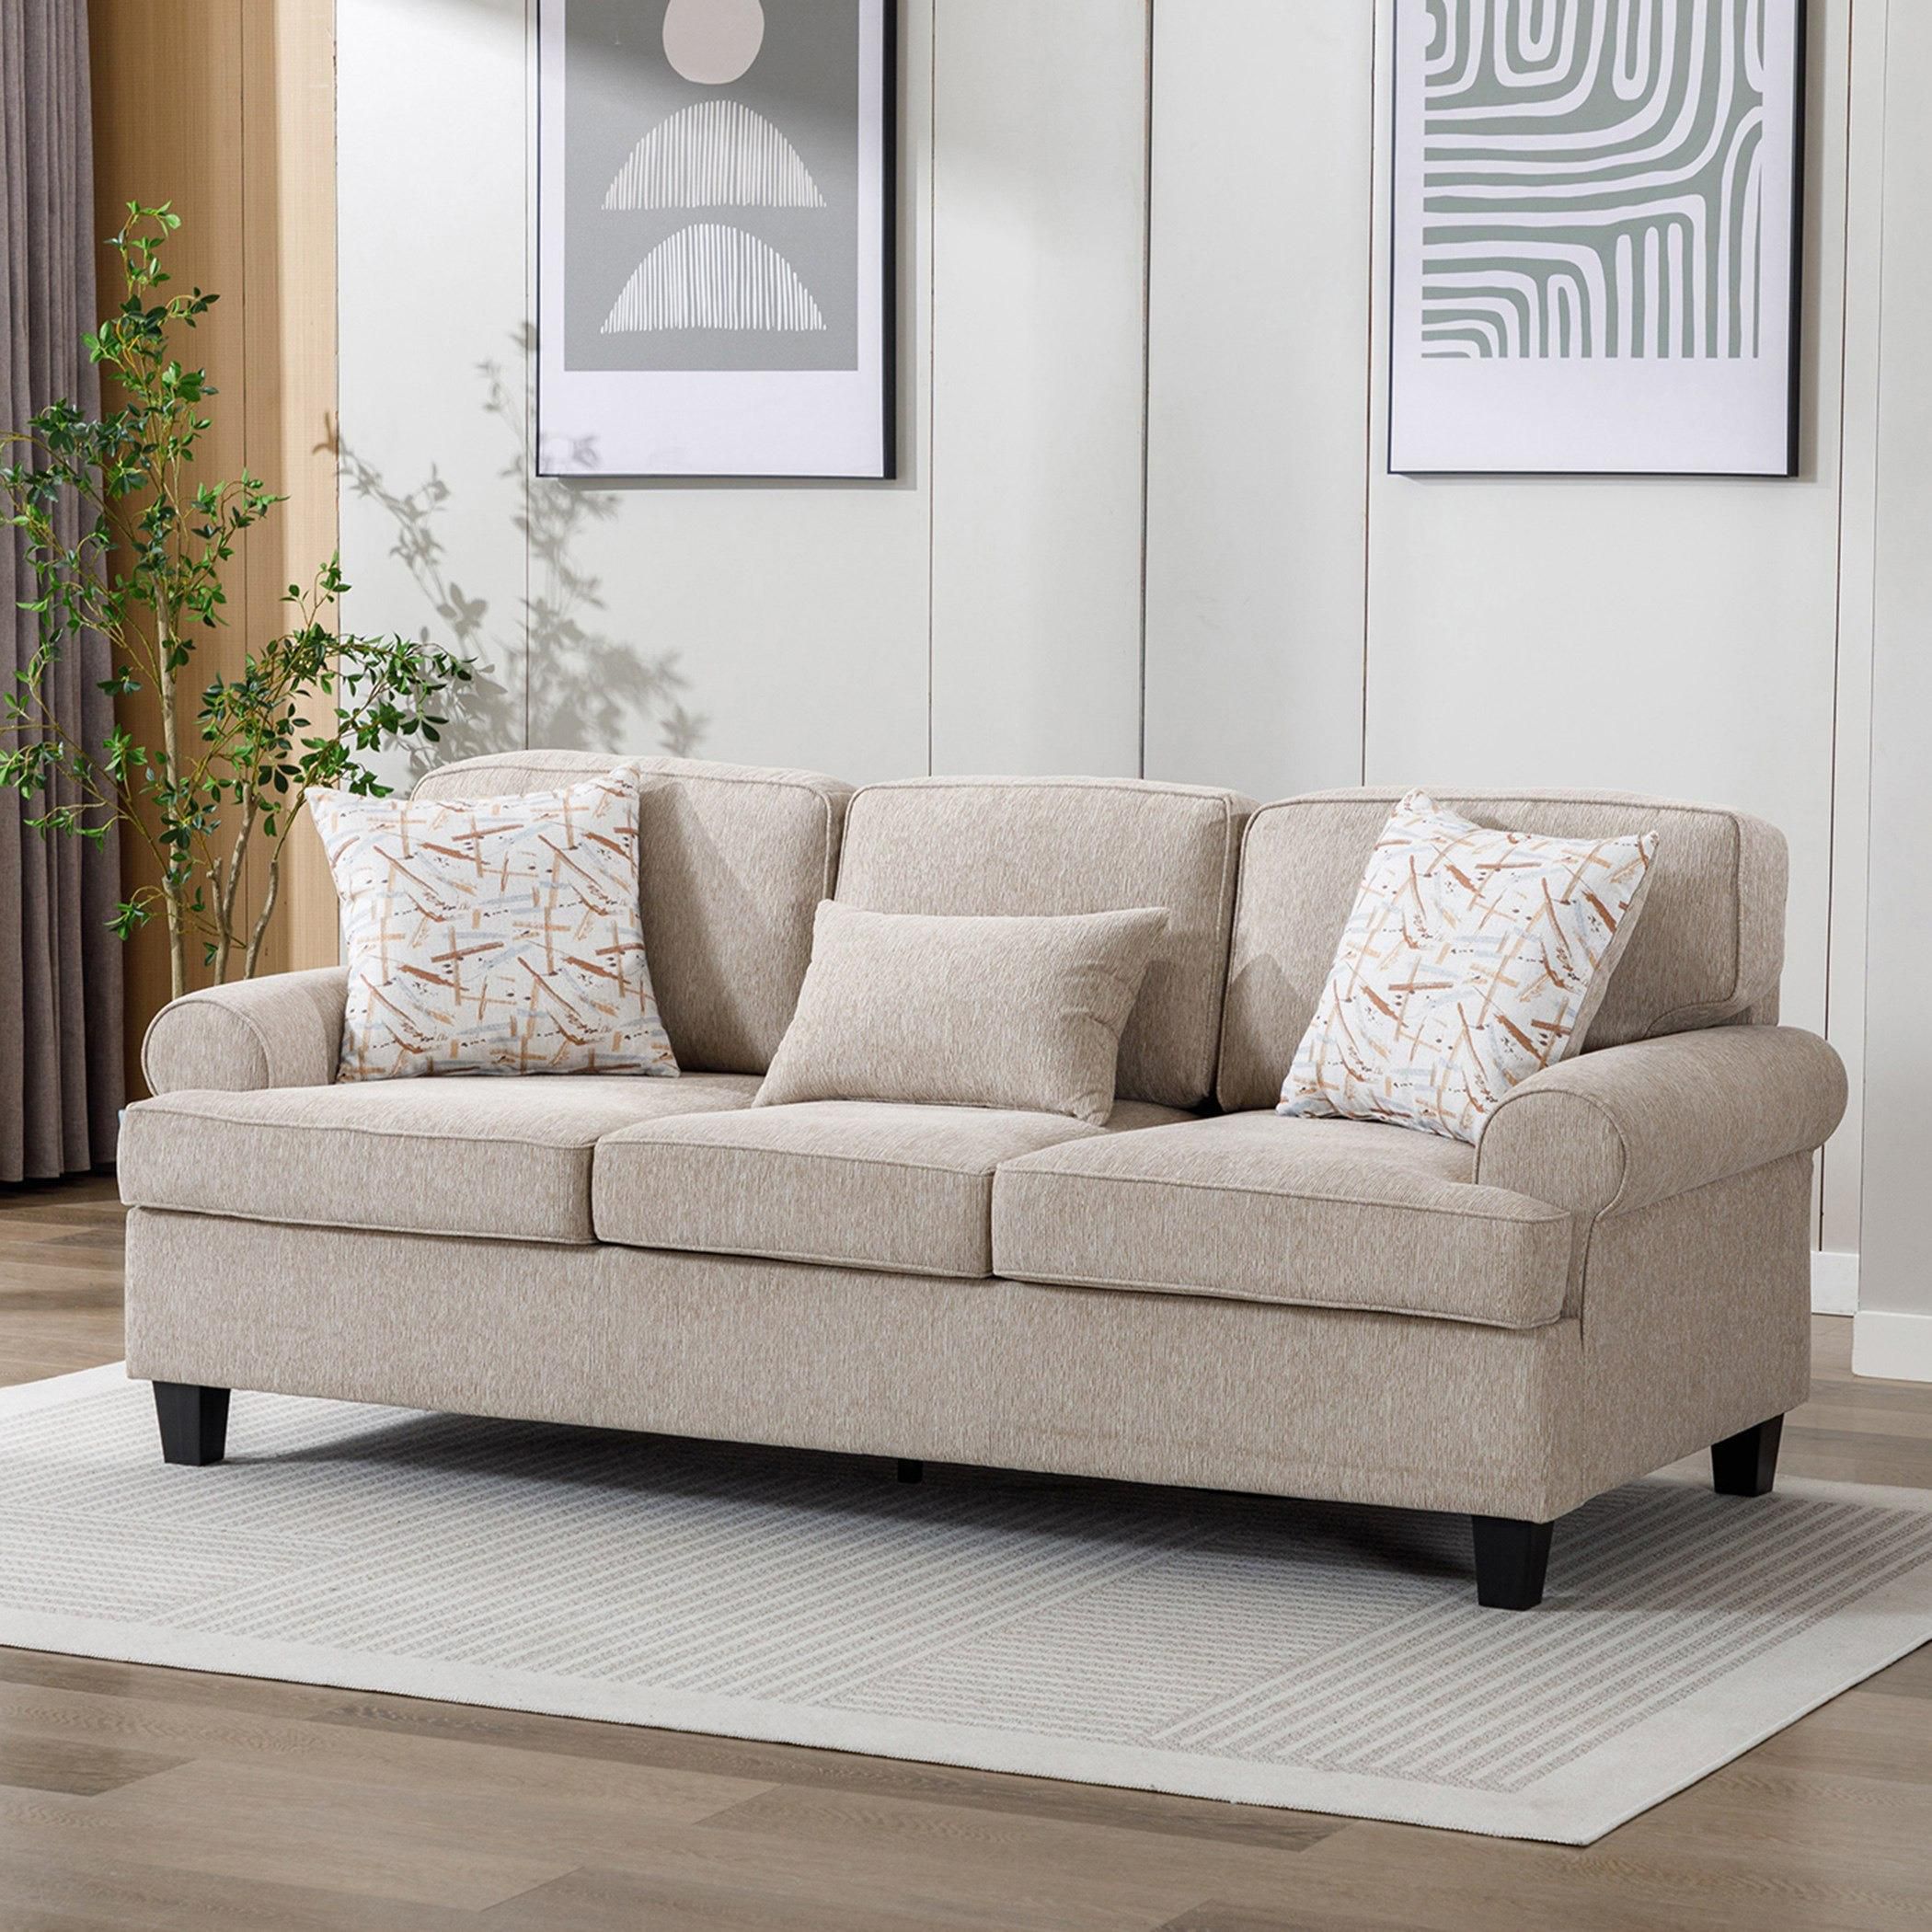 Manhattan Cambridge 3-Seater Fabric Sofa with 3 Throw Cushions